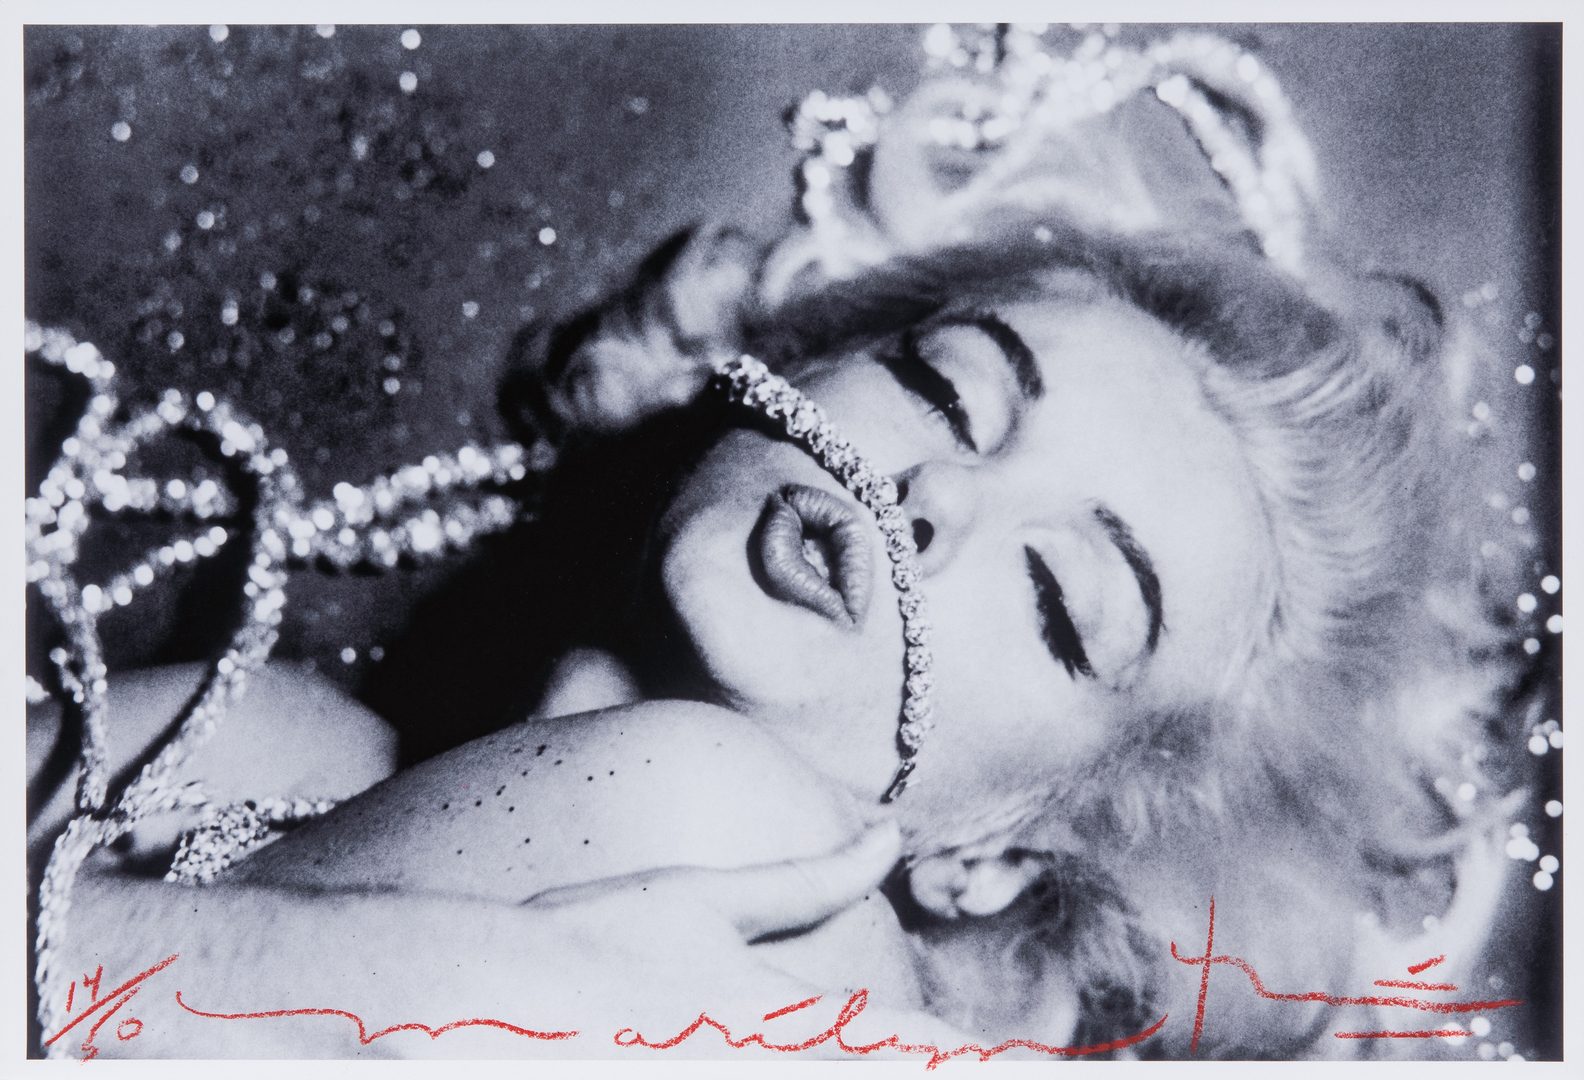 Lot 557: Bert Stern Marilyn Monroe Last Sitting Photograph, Kiss in Rhinestones